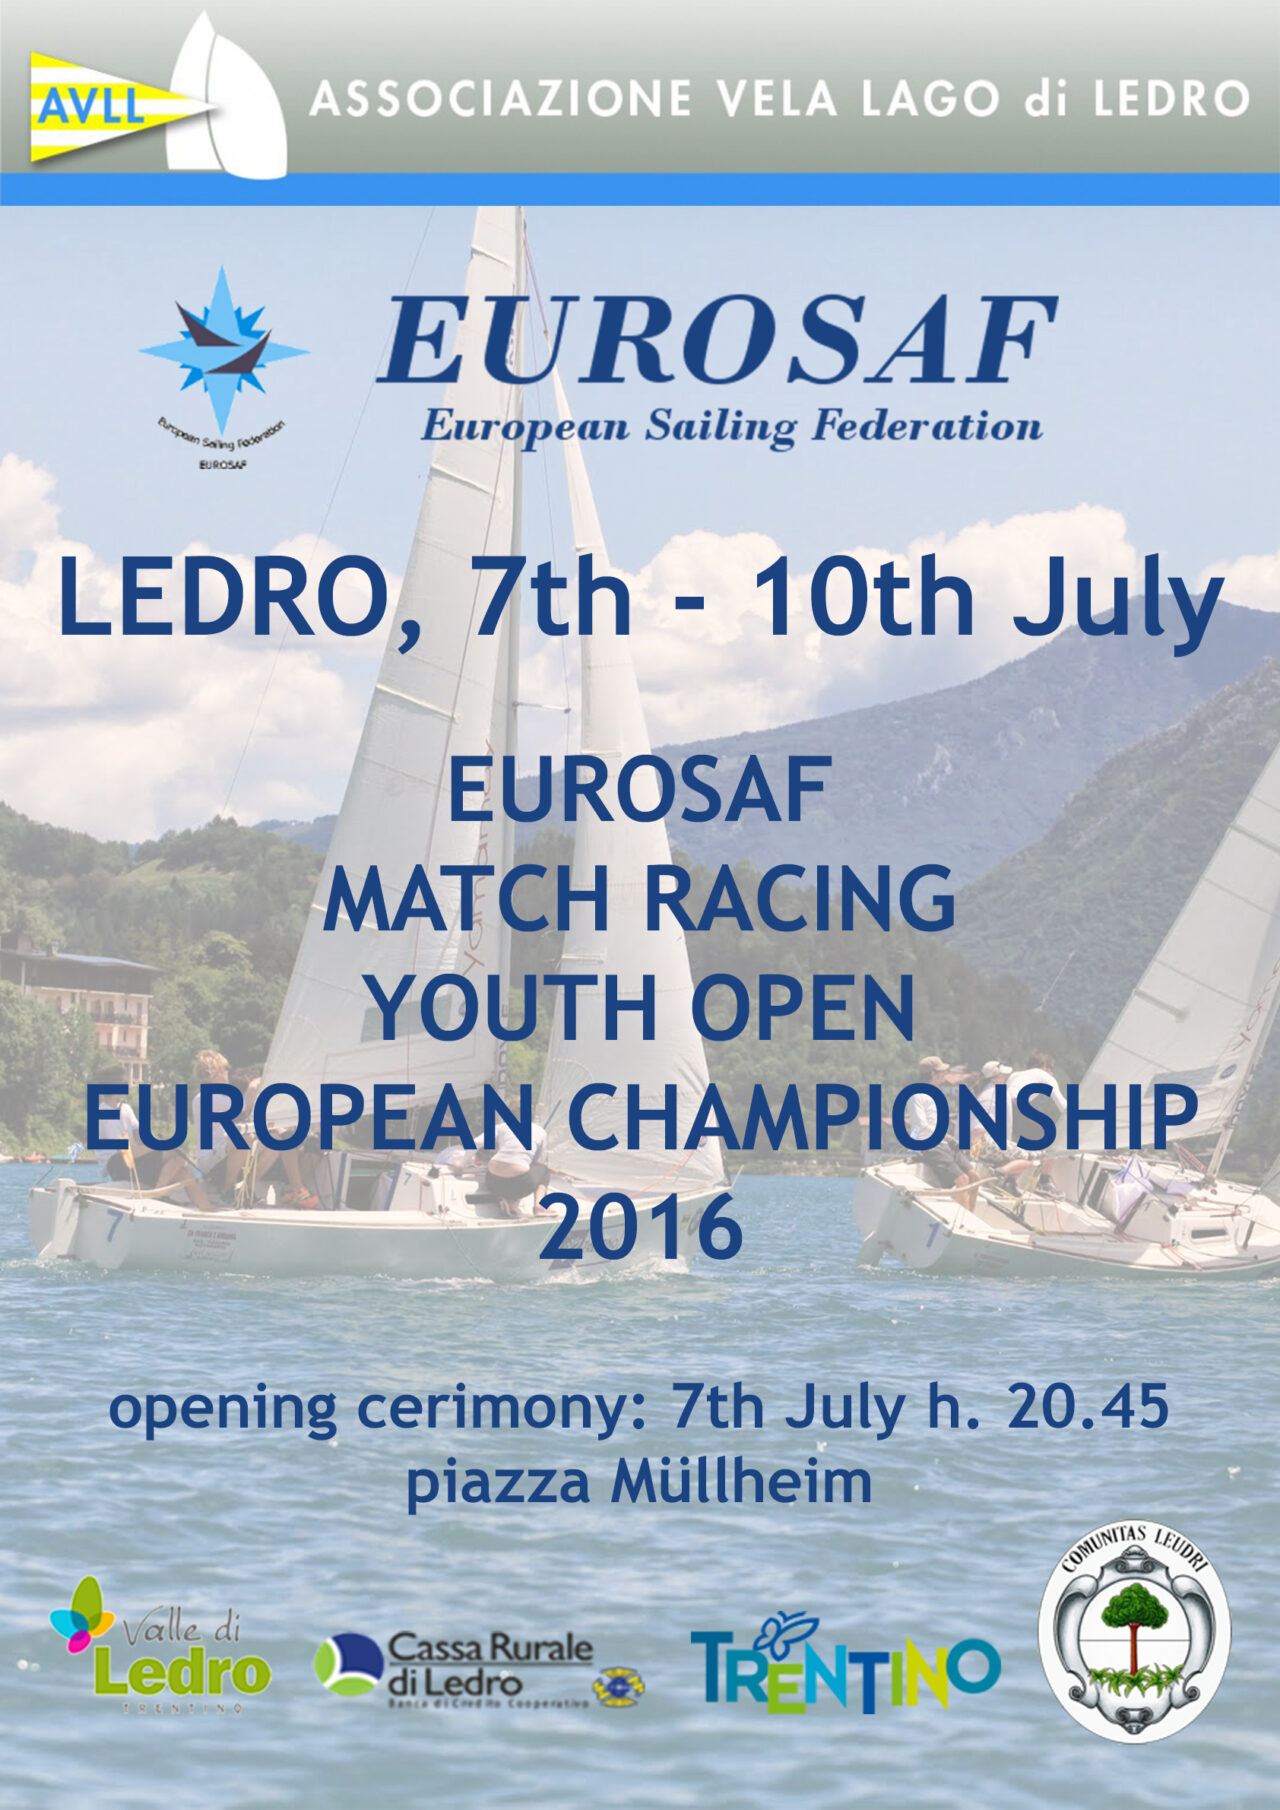 EUROSAF MATCH RACING YOUTH OPEN EUROPEAN CHAMPIONSHIP 2016